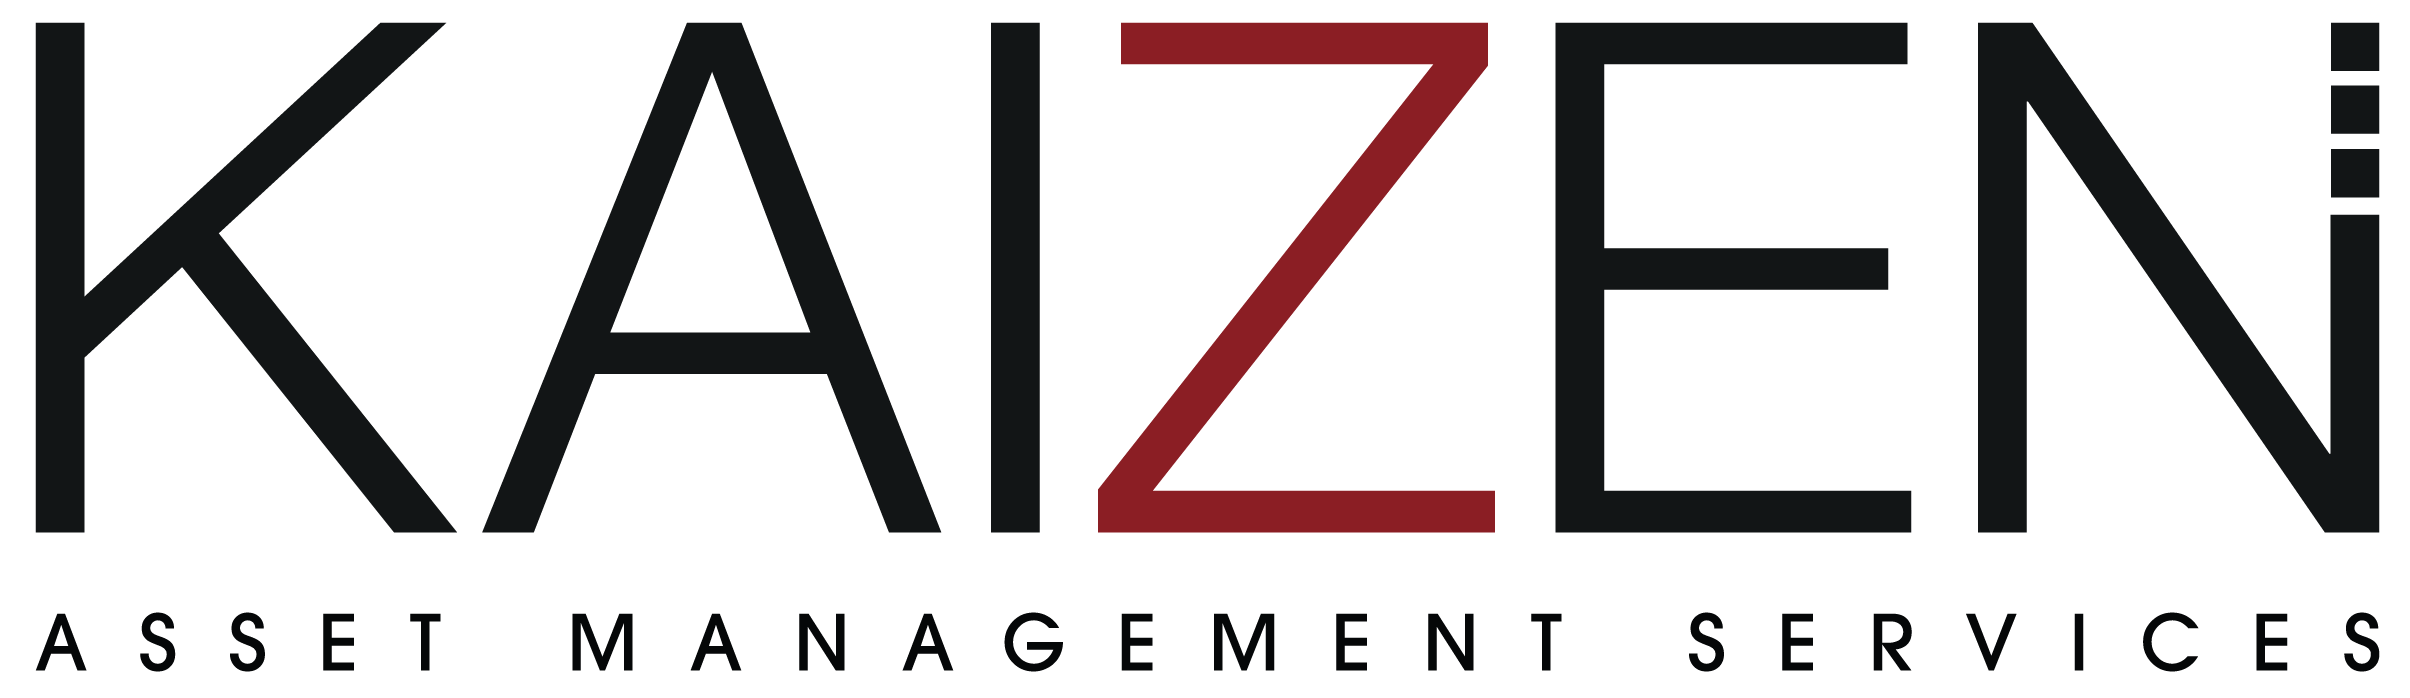 Kaizen Owners Association Management